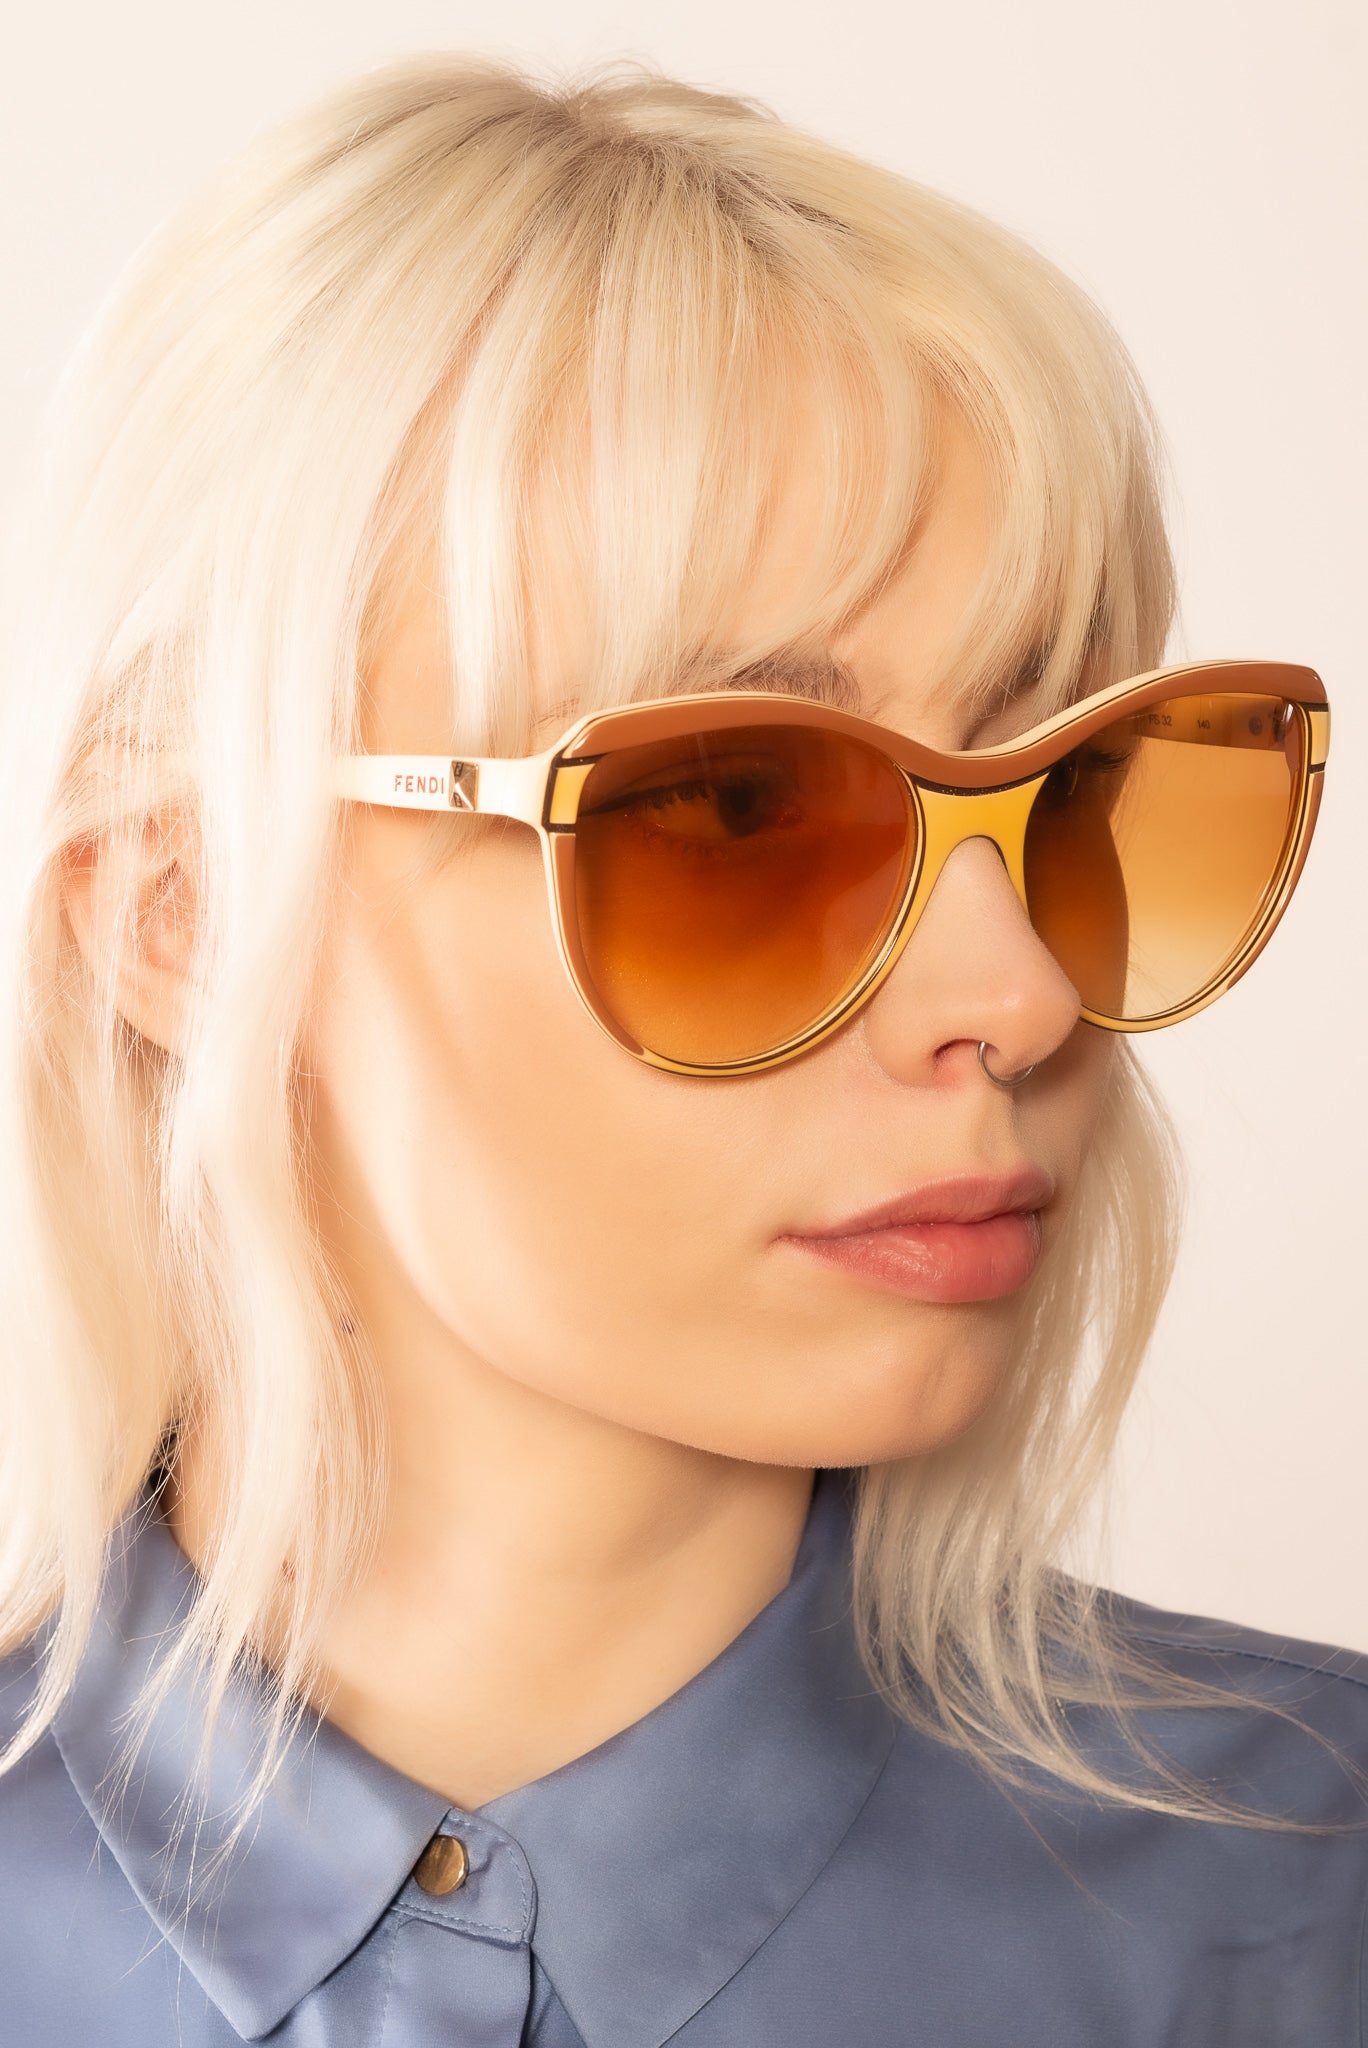 Fendi Way Cat Eye Sunglasses in Beige - Fendi